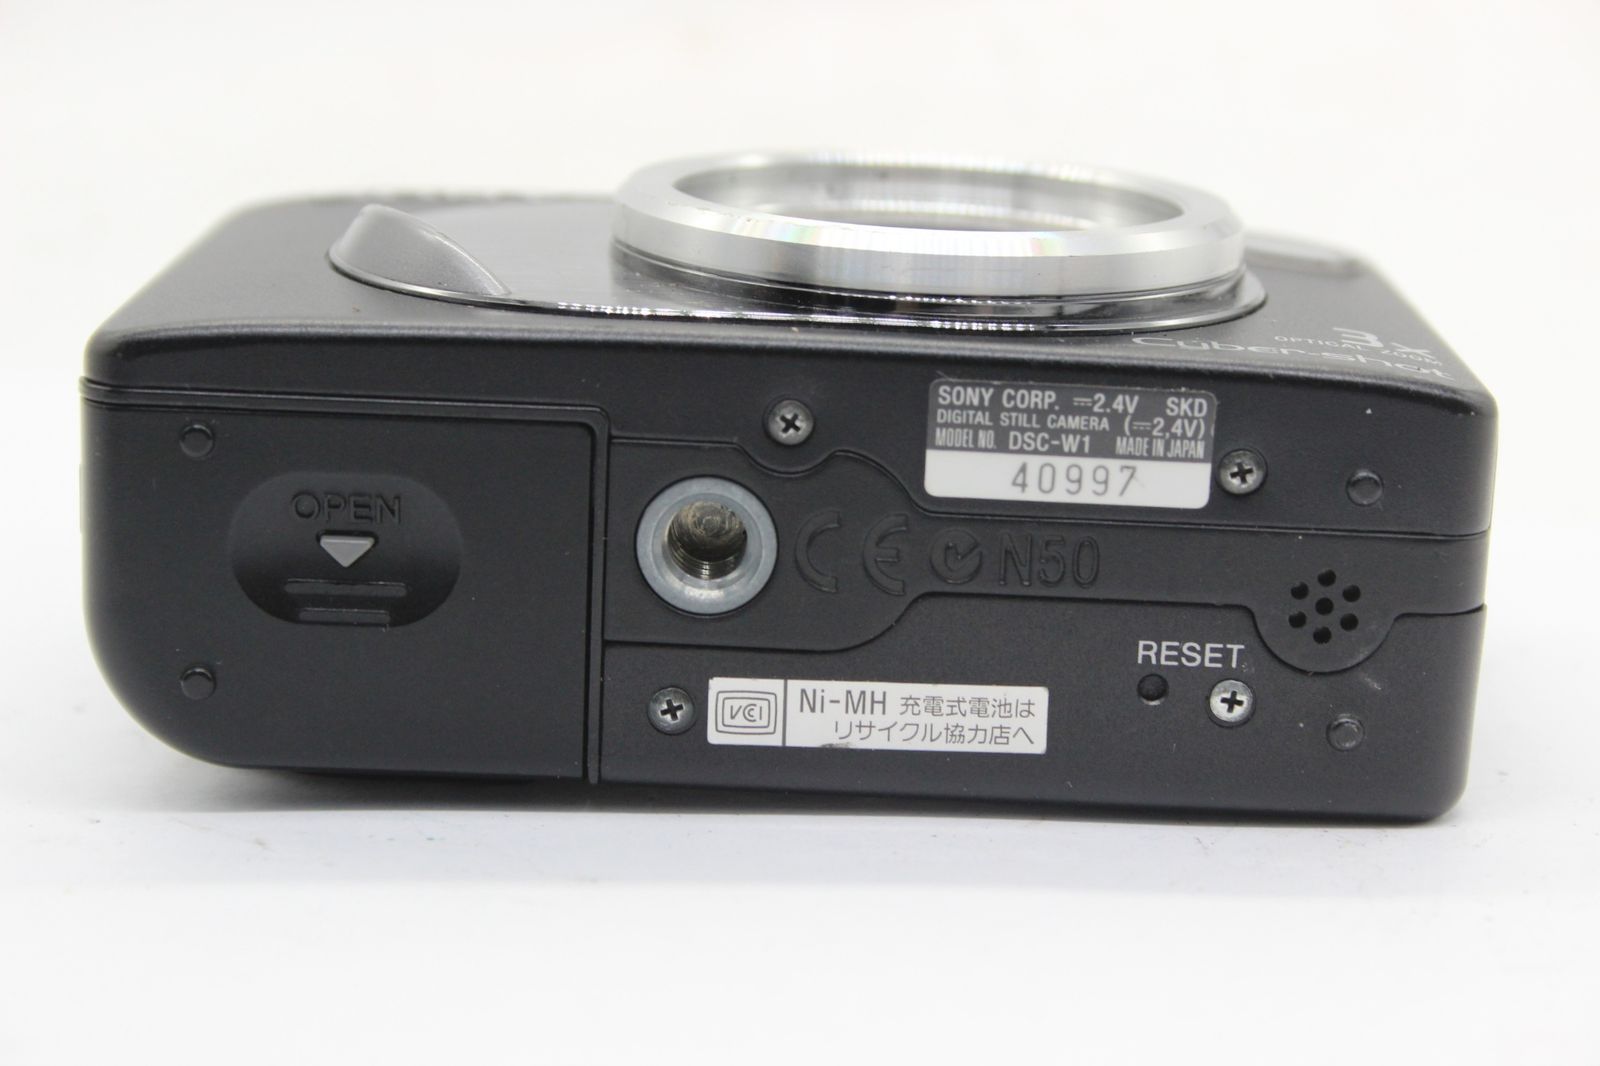 SONY 【返品保証】 【便利な単三電池で使用可】ソニー SONY Cyber-sho DSC-W1 ブラック 3x コンパクトデジタルカメラ s9923